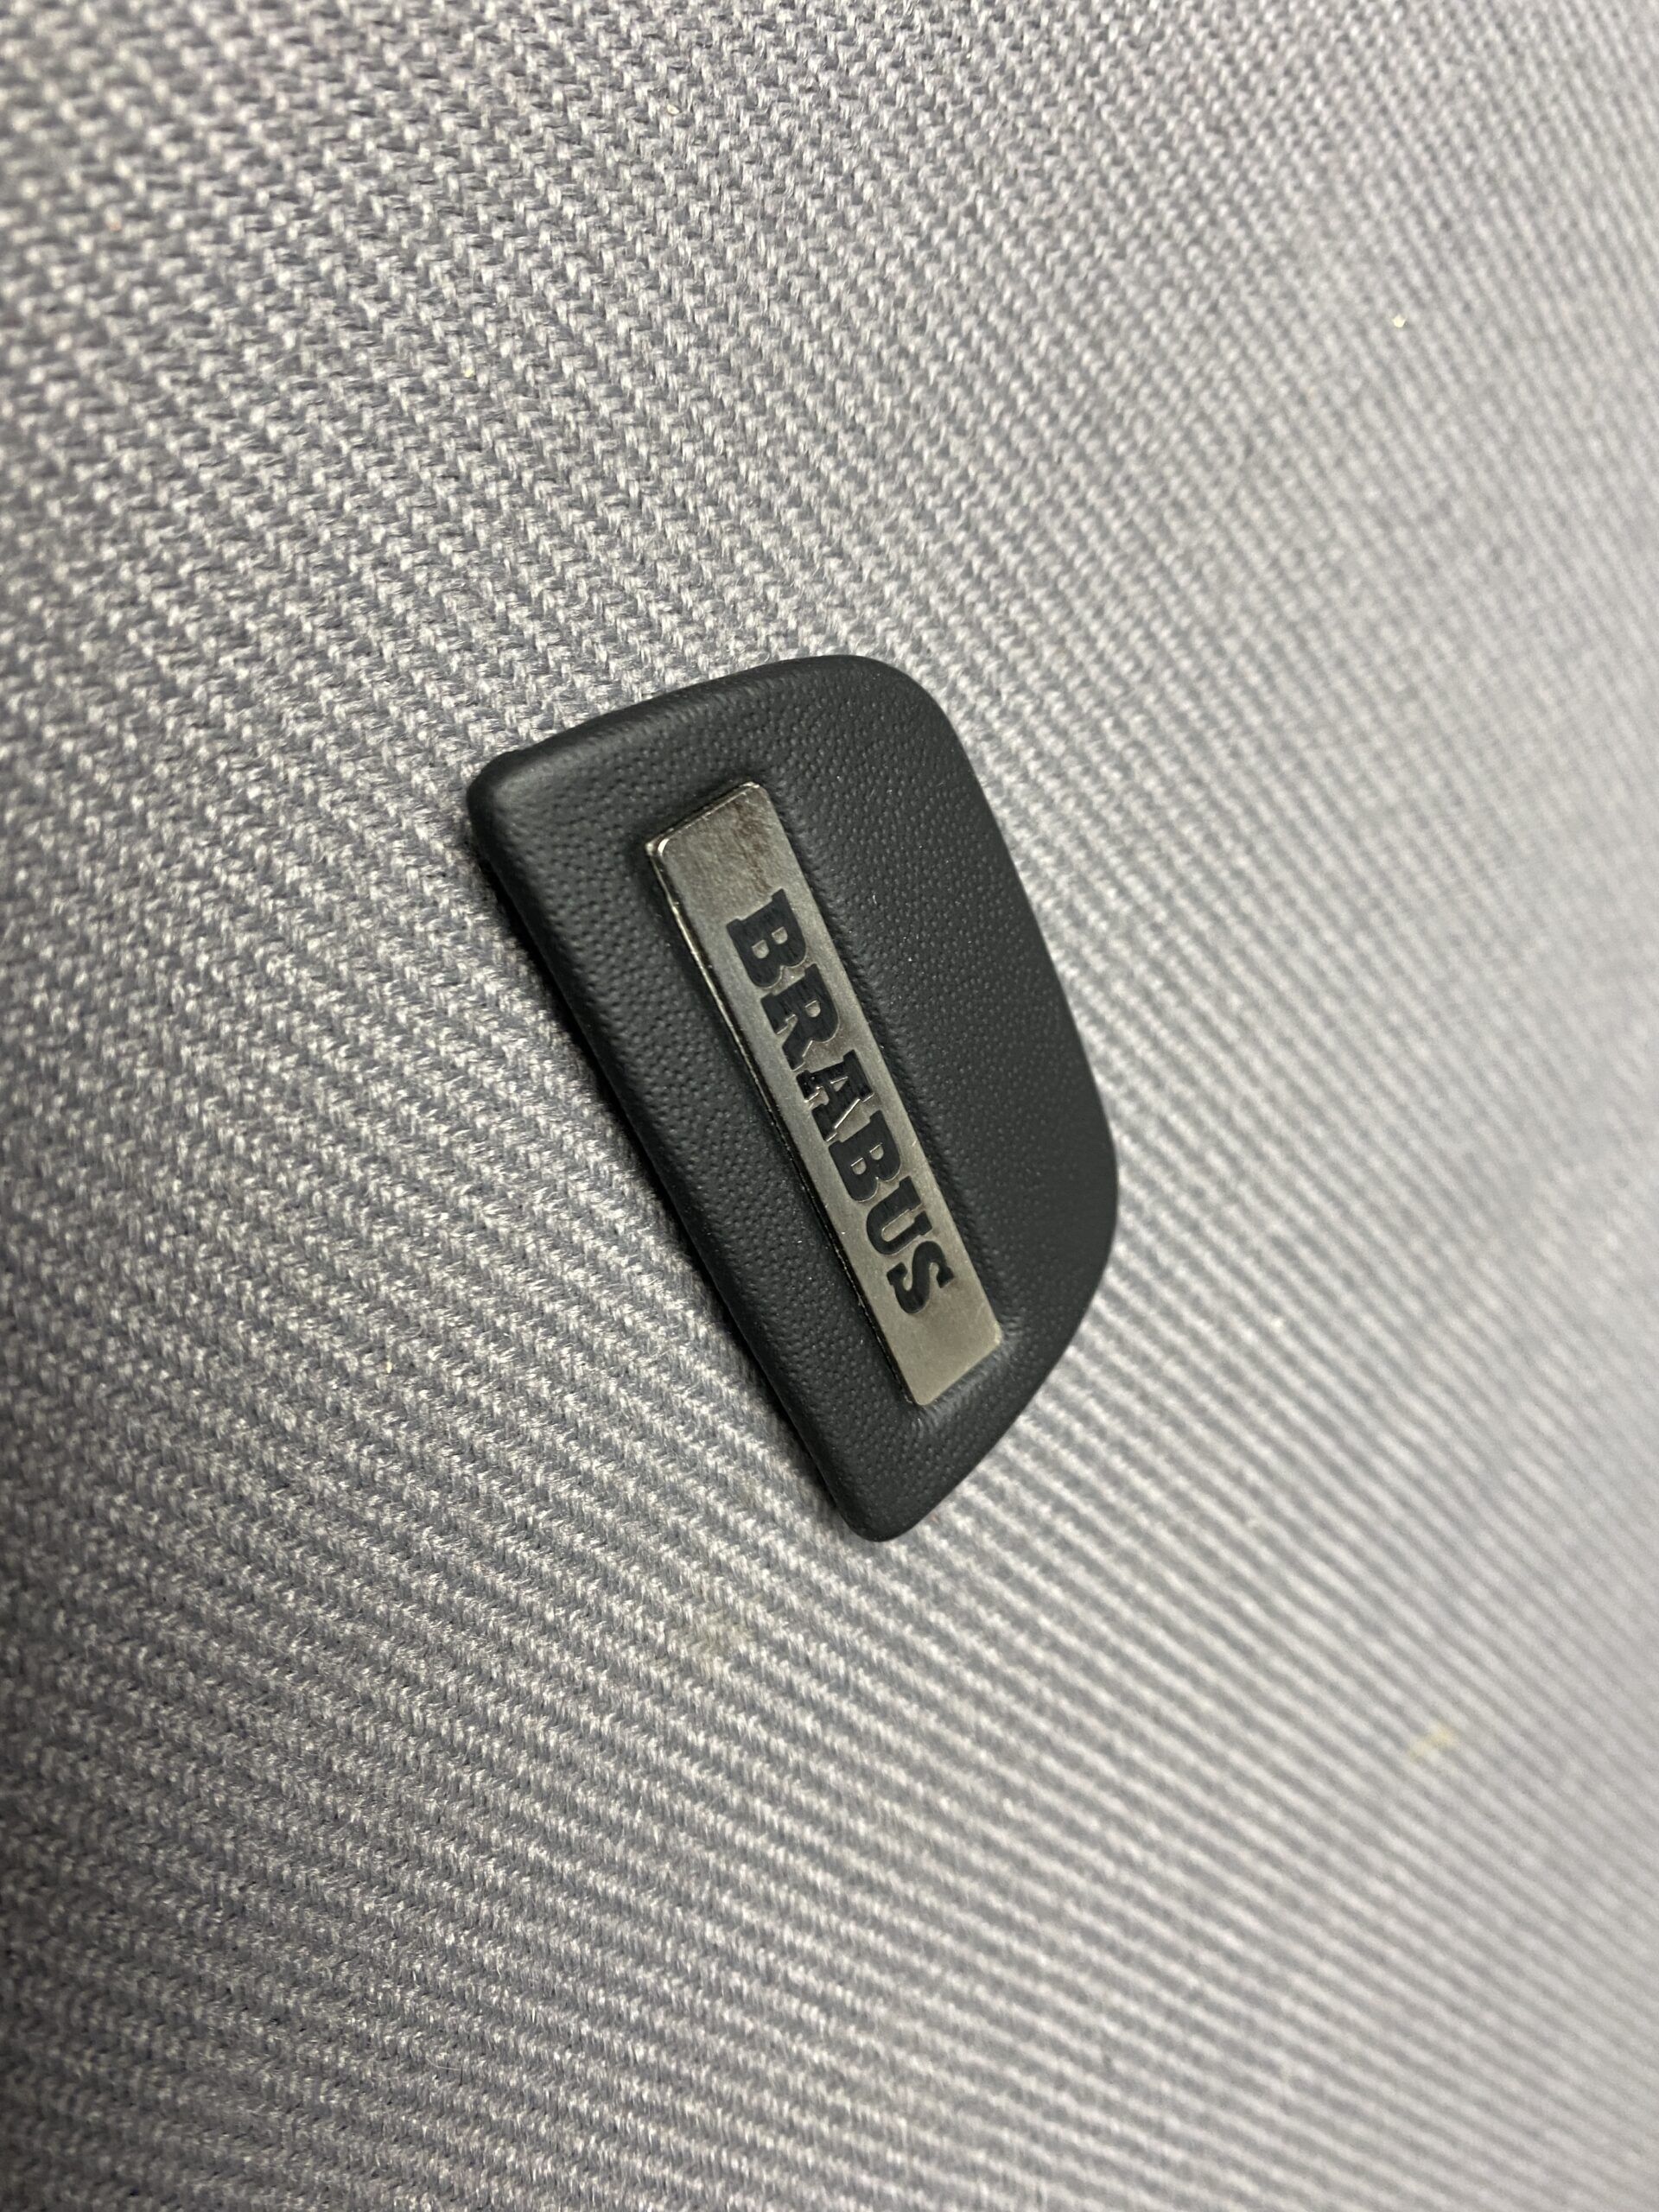 Brabus Emblem Badge Black for AMG Steering Wheels Mercedes G Class